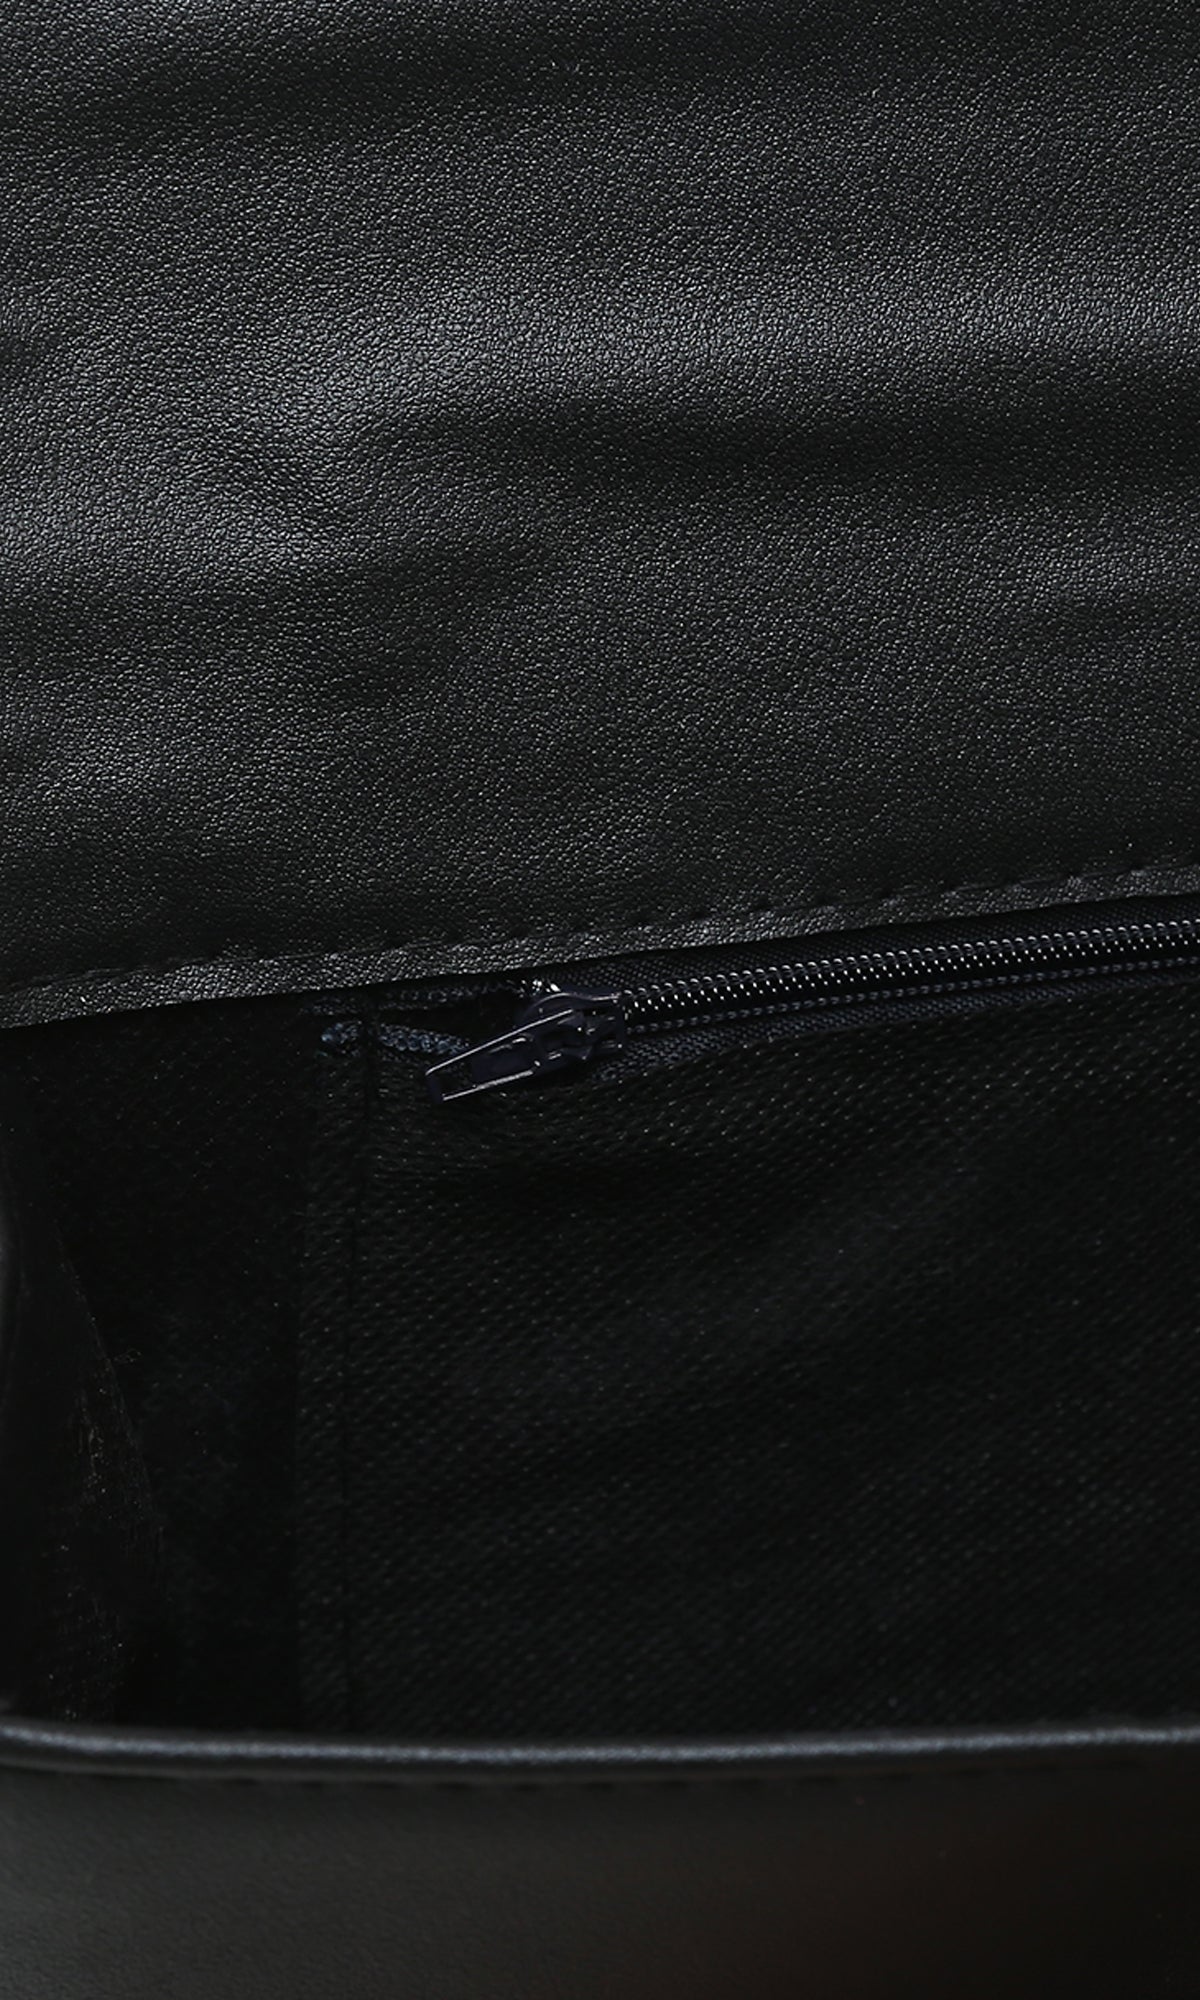 O181971 Blocks Cross-Body Bag With Chain Handle - Black